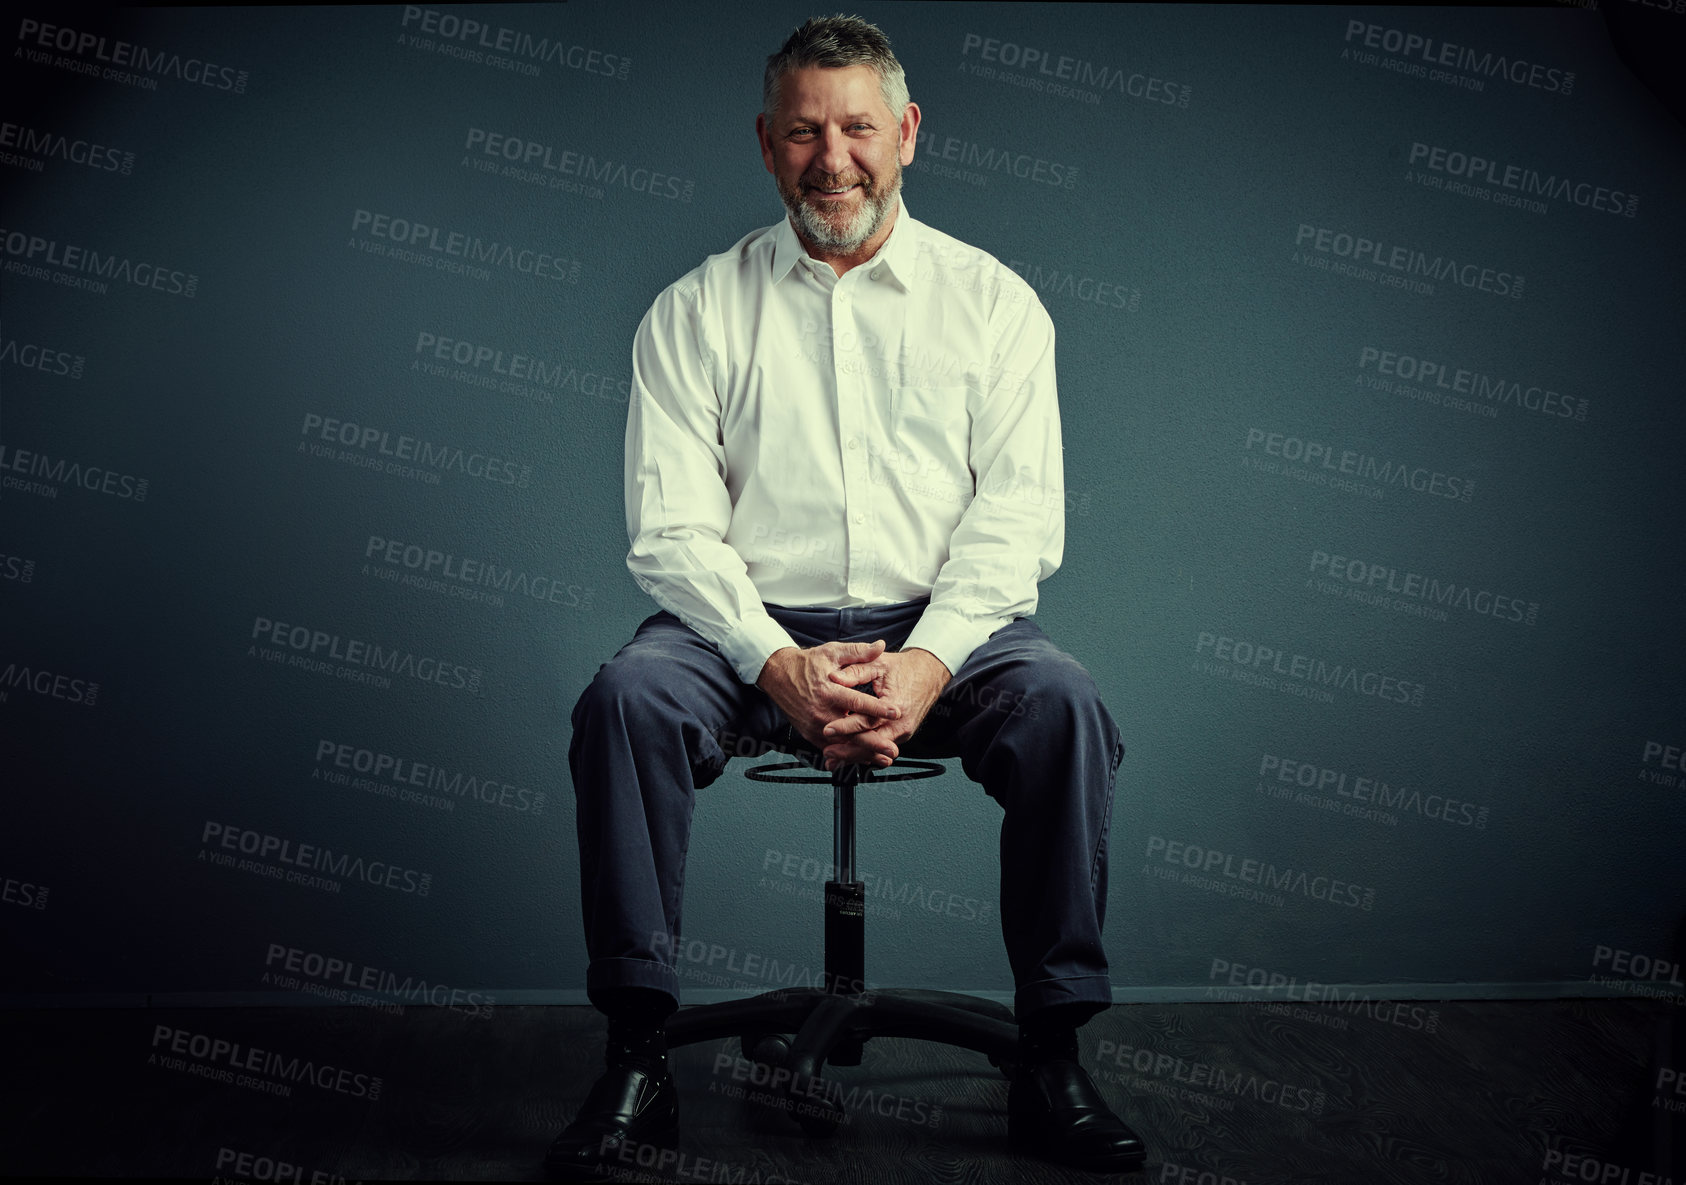 Buy stock photo Studio portrait of a handsome mature businessman sitting down against a dark background